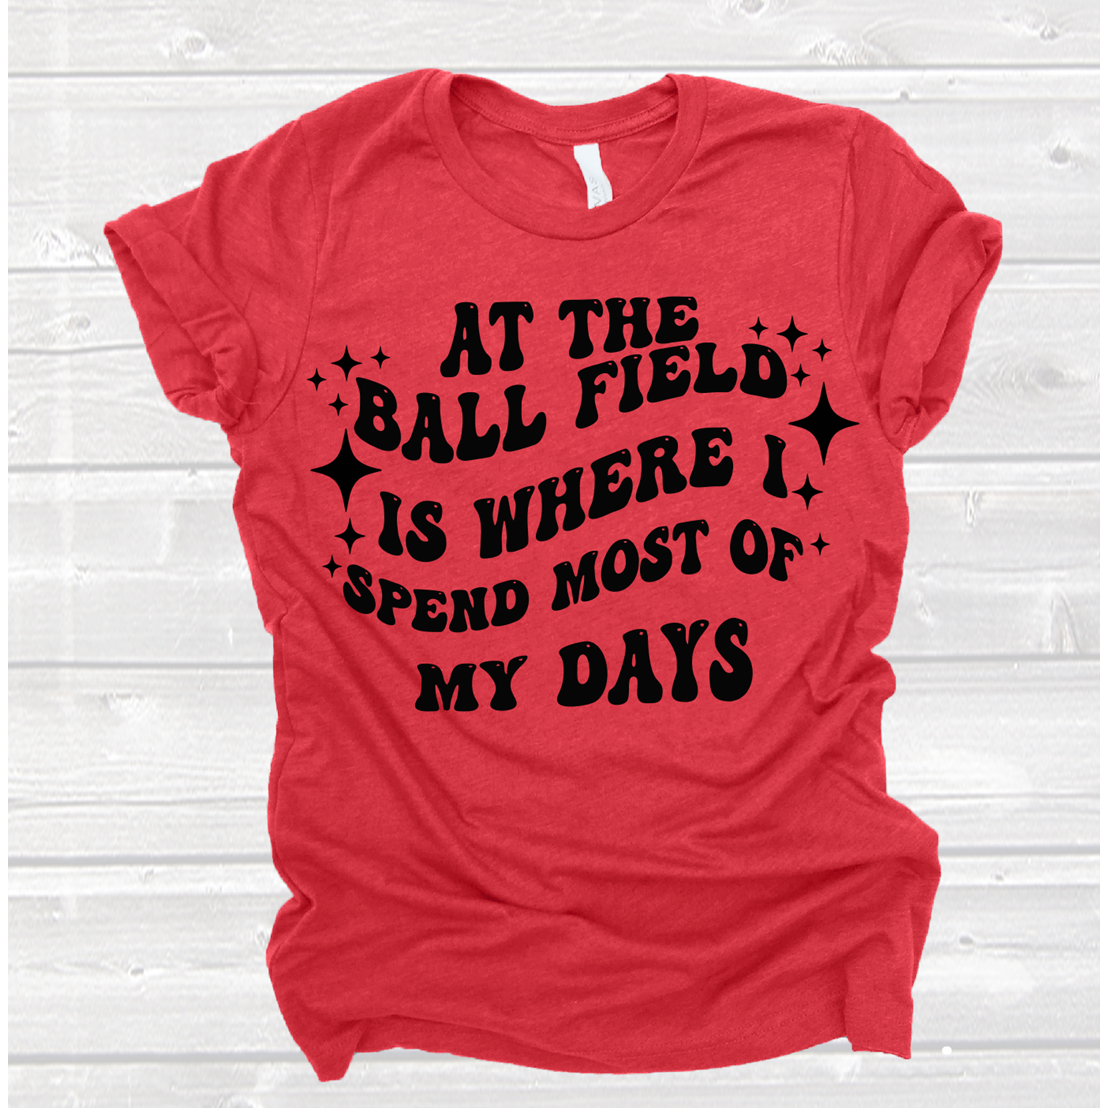 Ball Field Most of My Days Tee or Sweatshirt